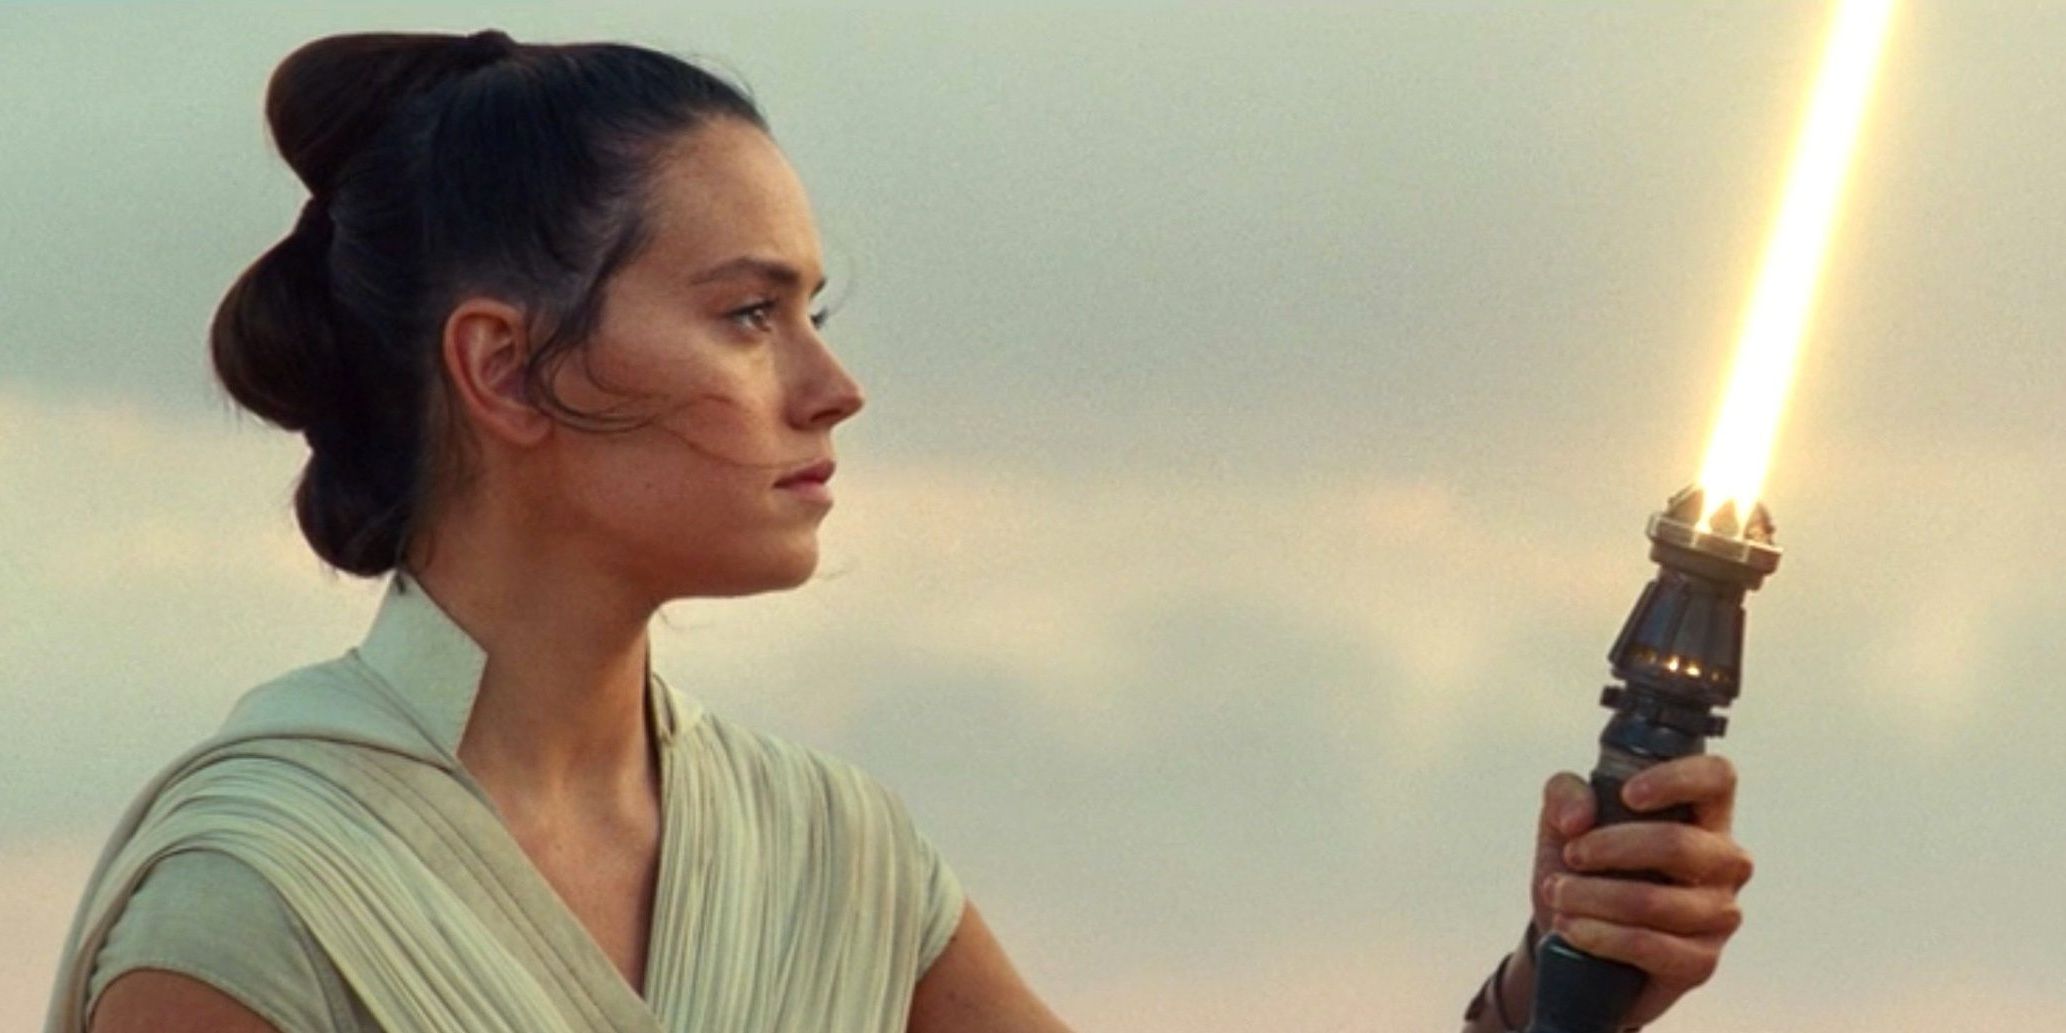 Rey holding her new lightsaber in Star Wars The Rise Of Skywalker